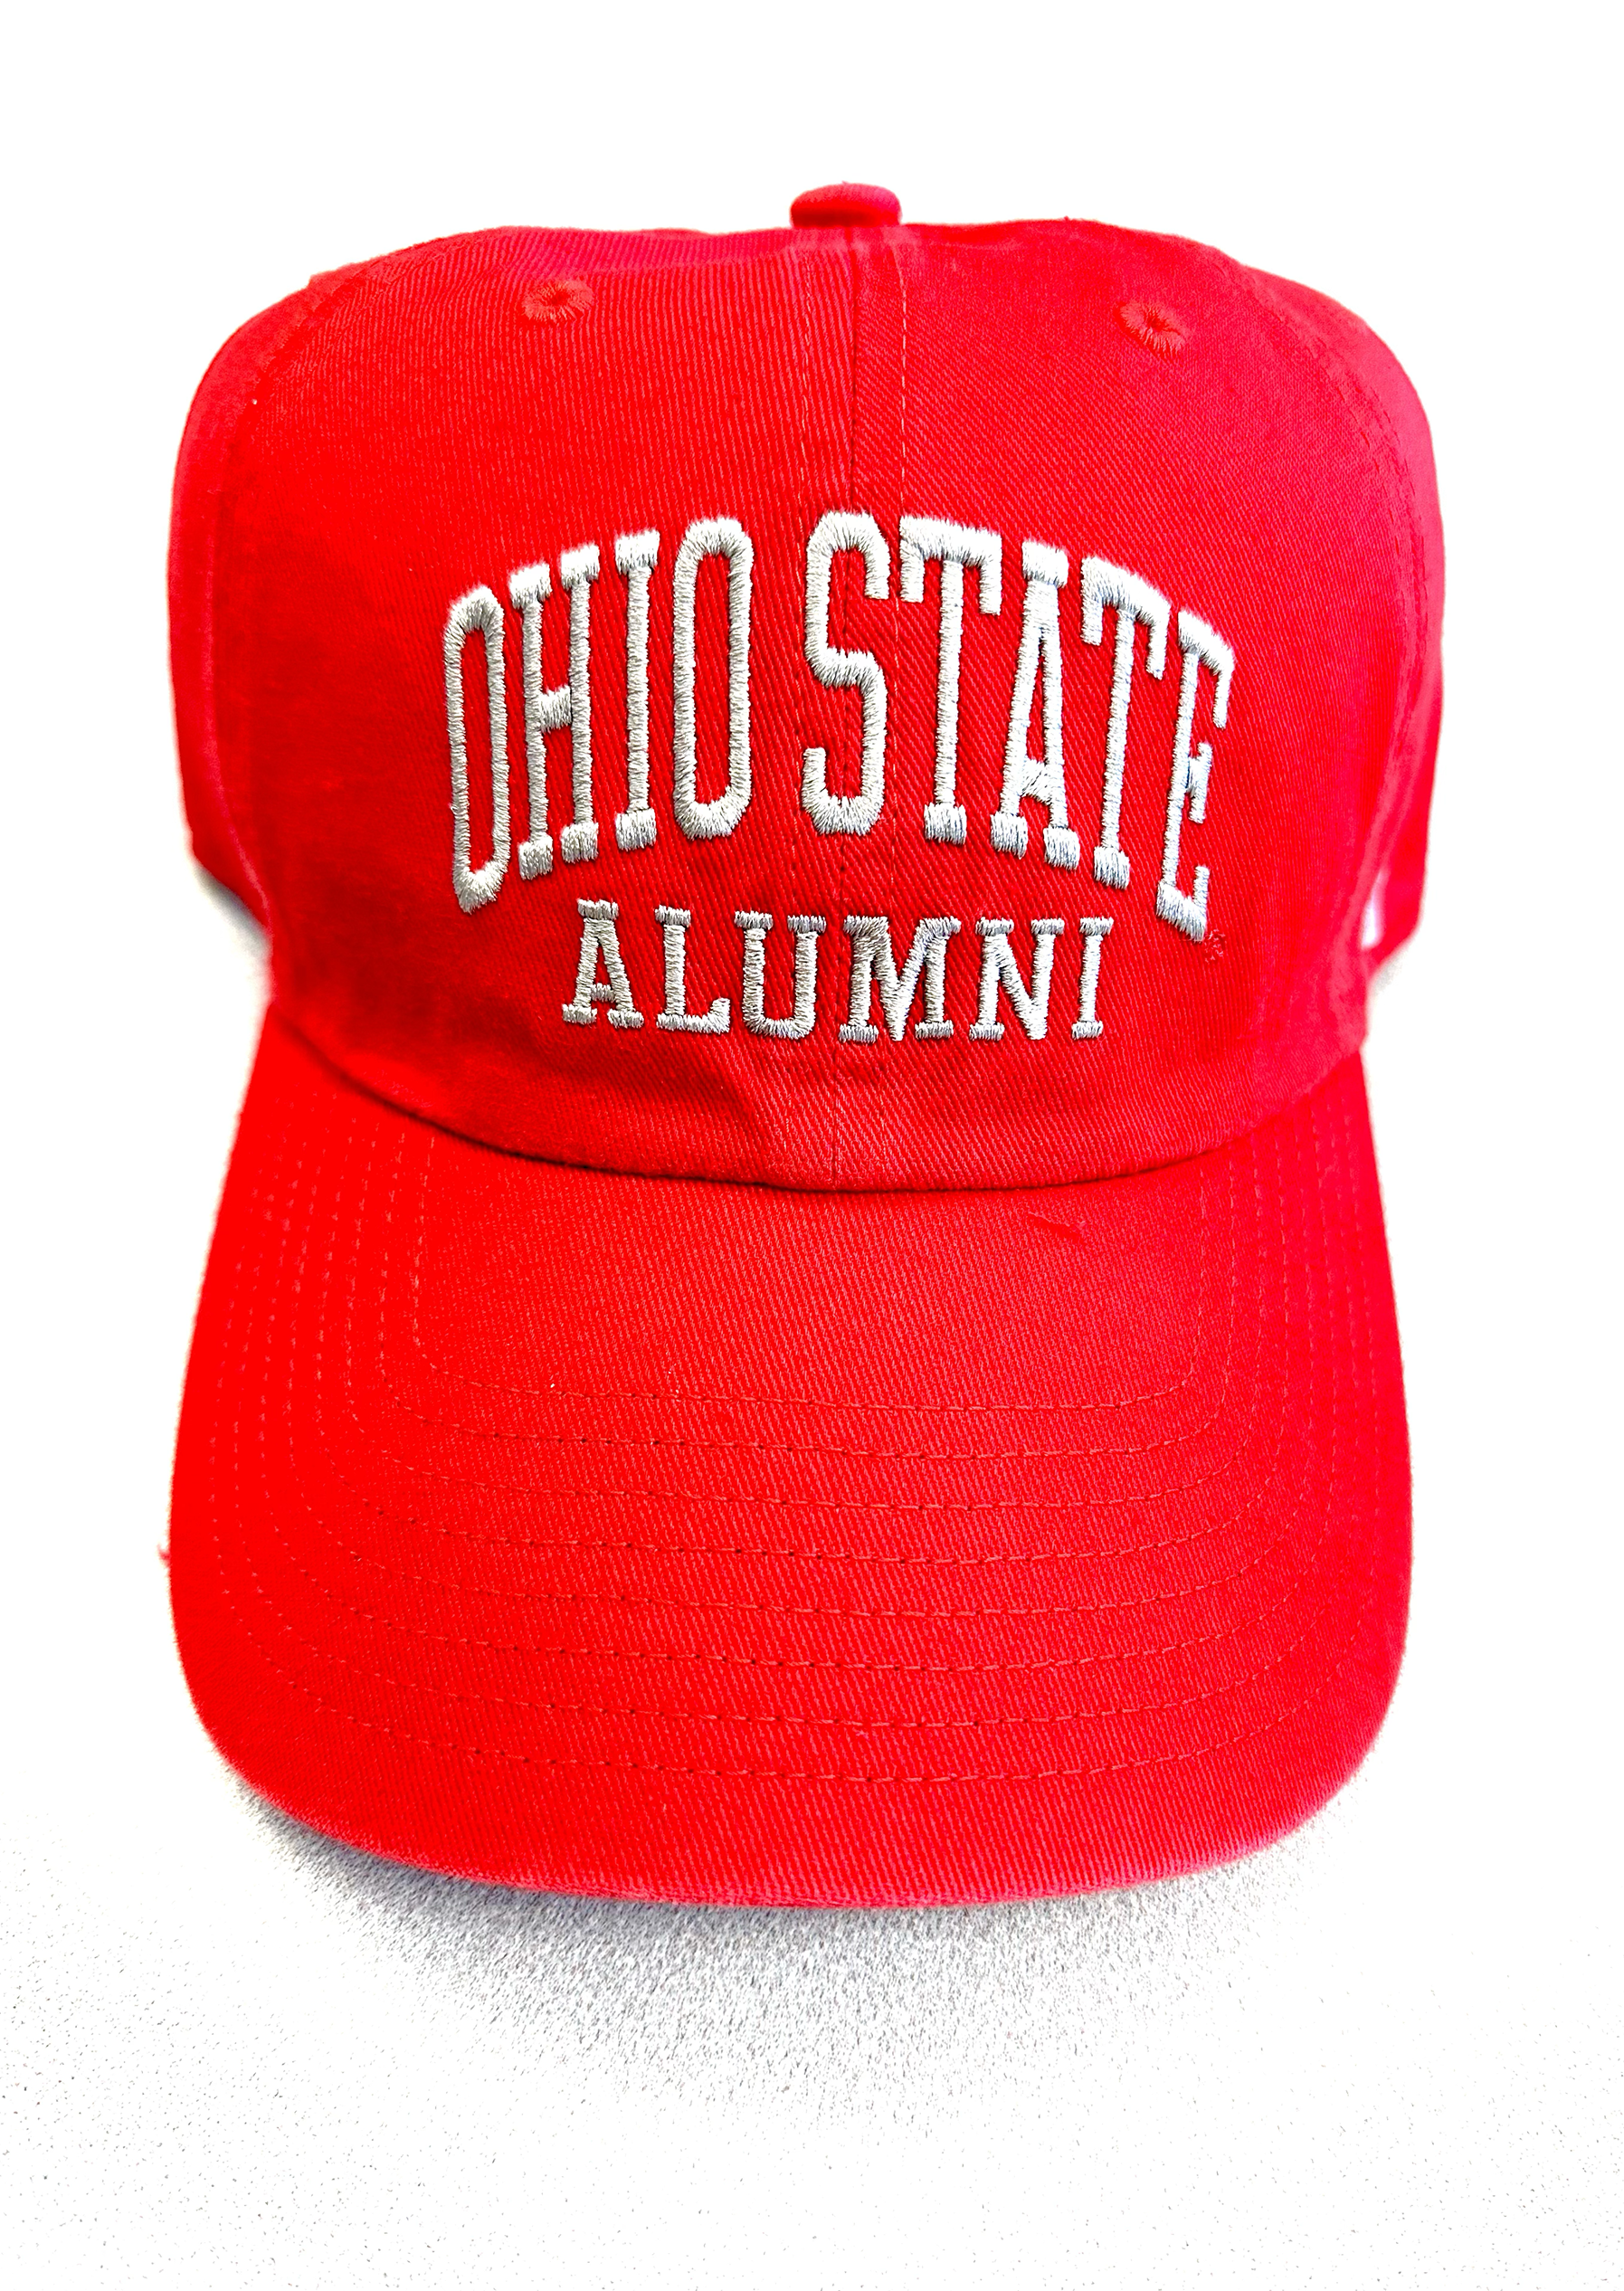 Ohio State Alumni hat